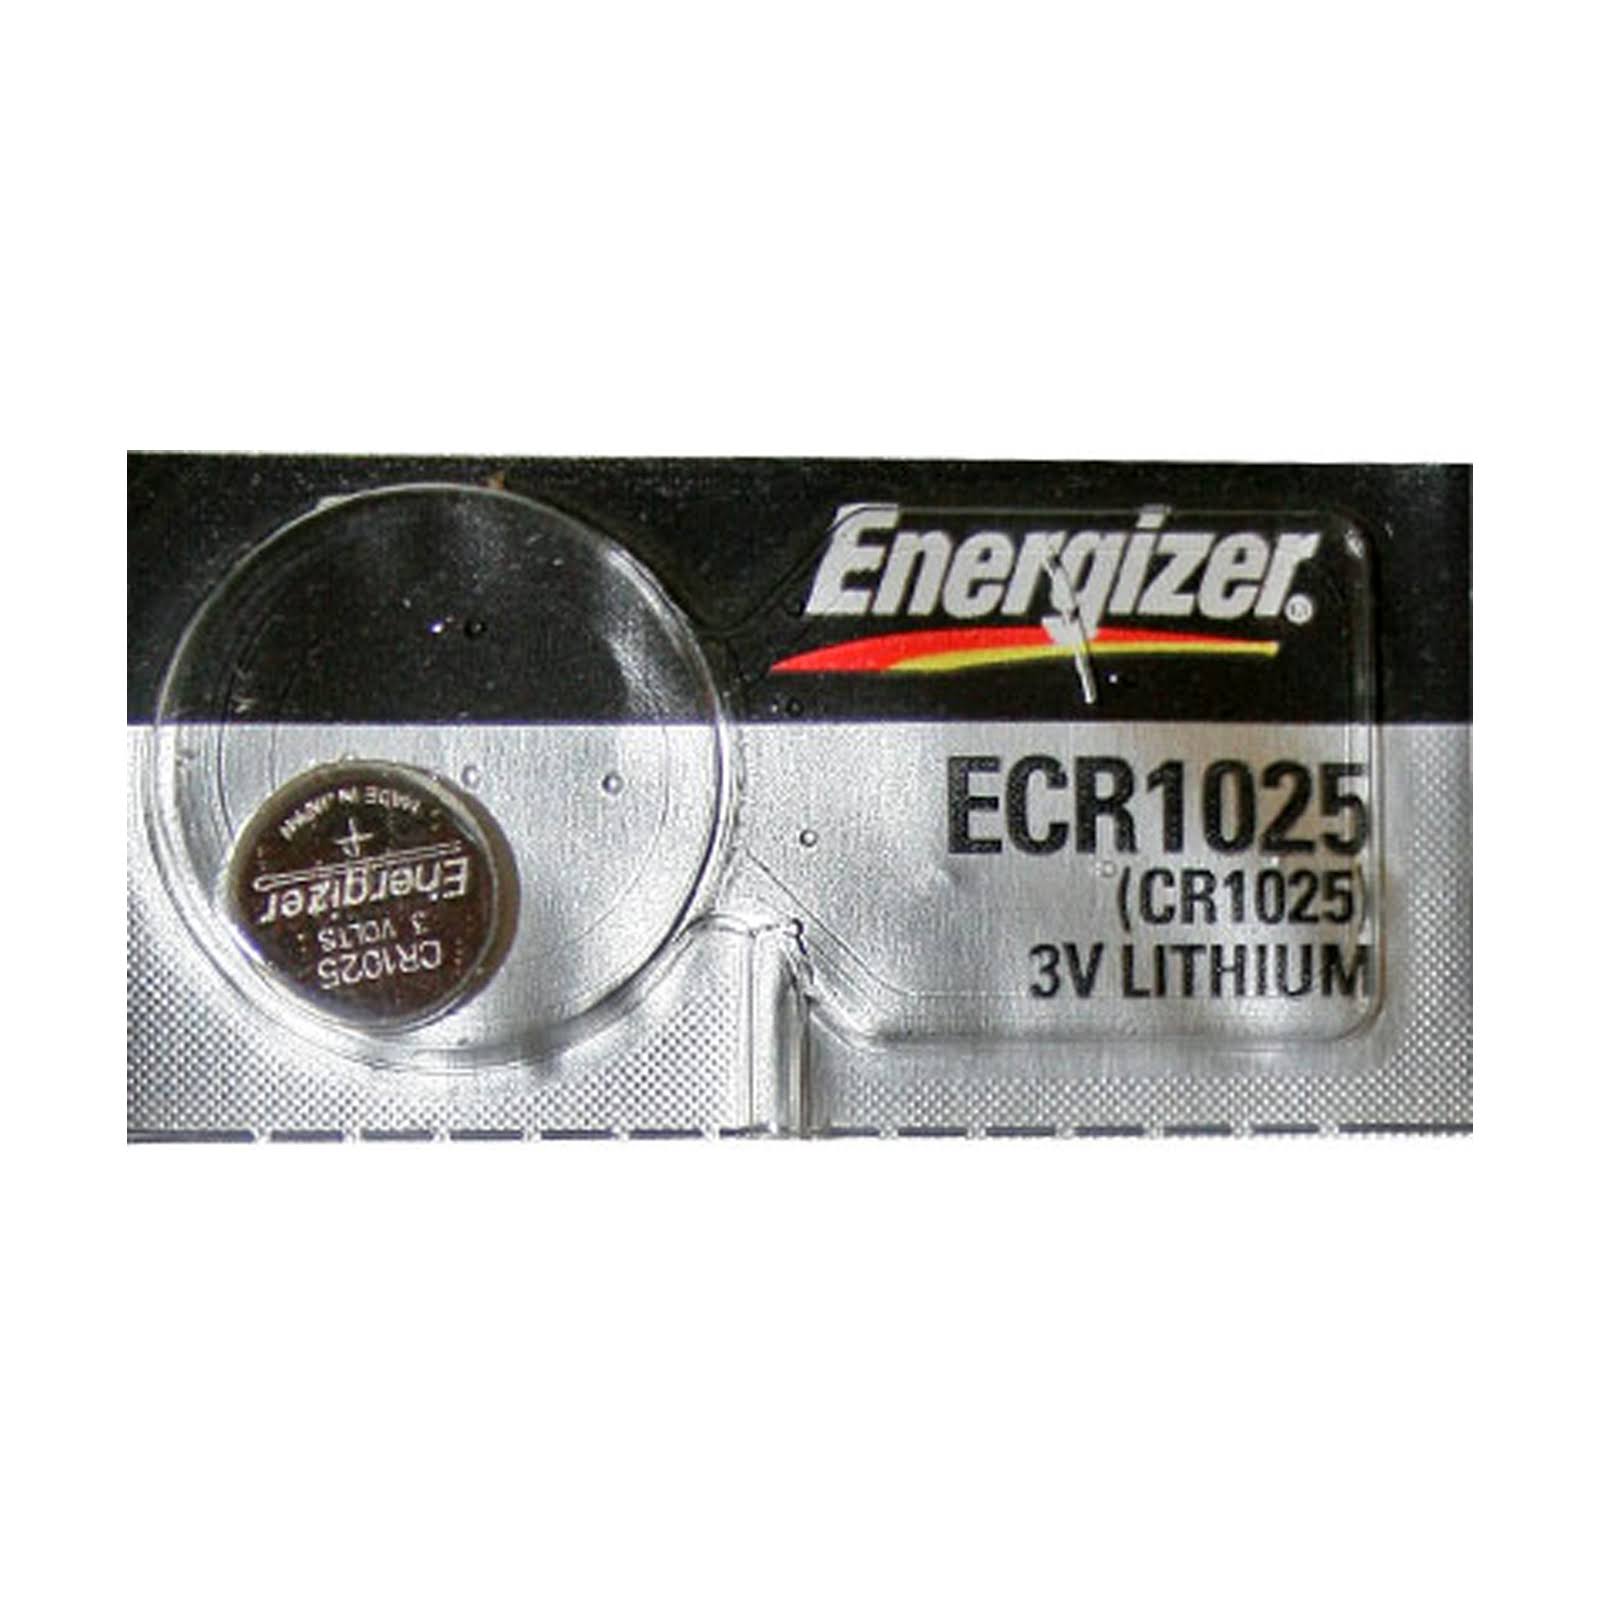 Energizer CR1025 3V Lithium Battery